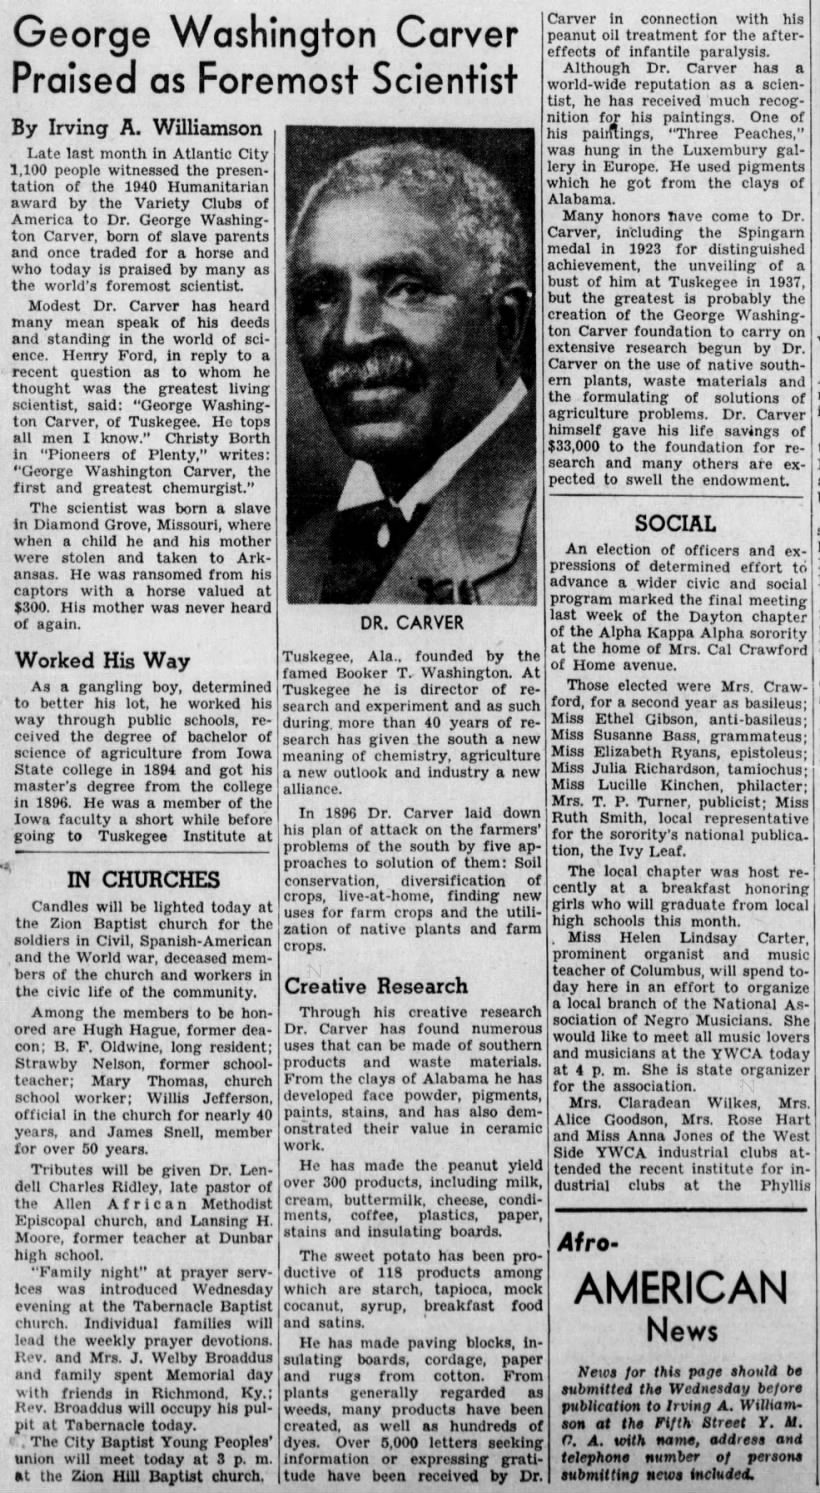 George Washington Carver Praised as Foremost Scientist